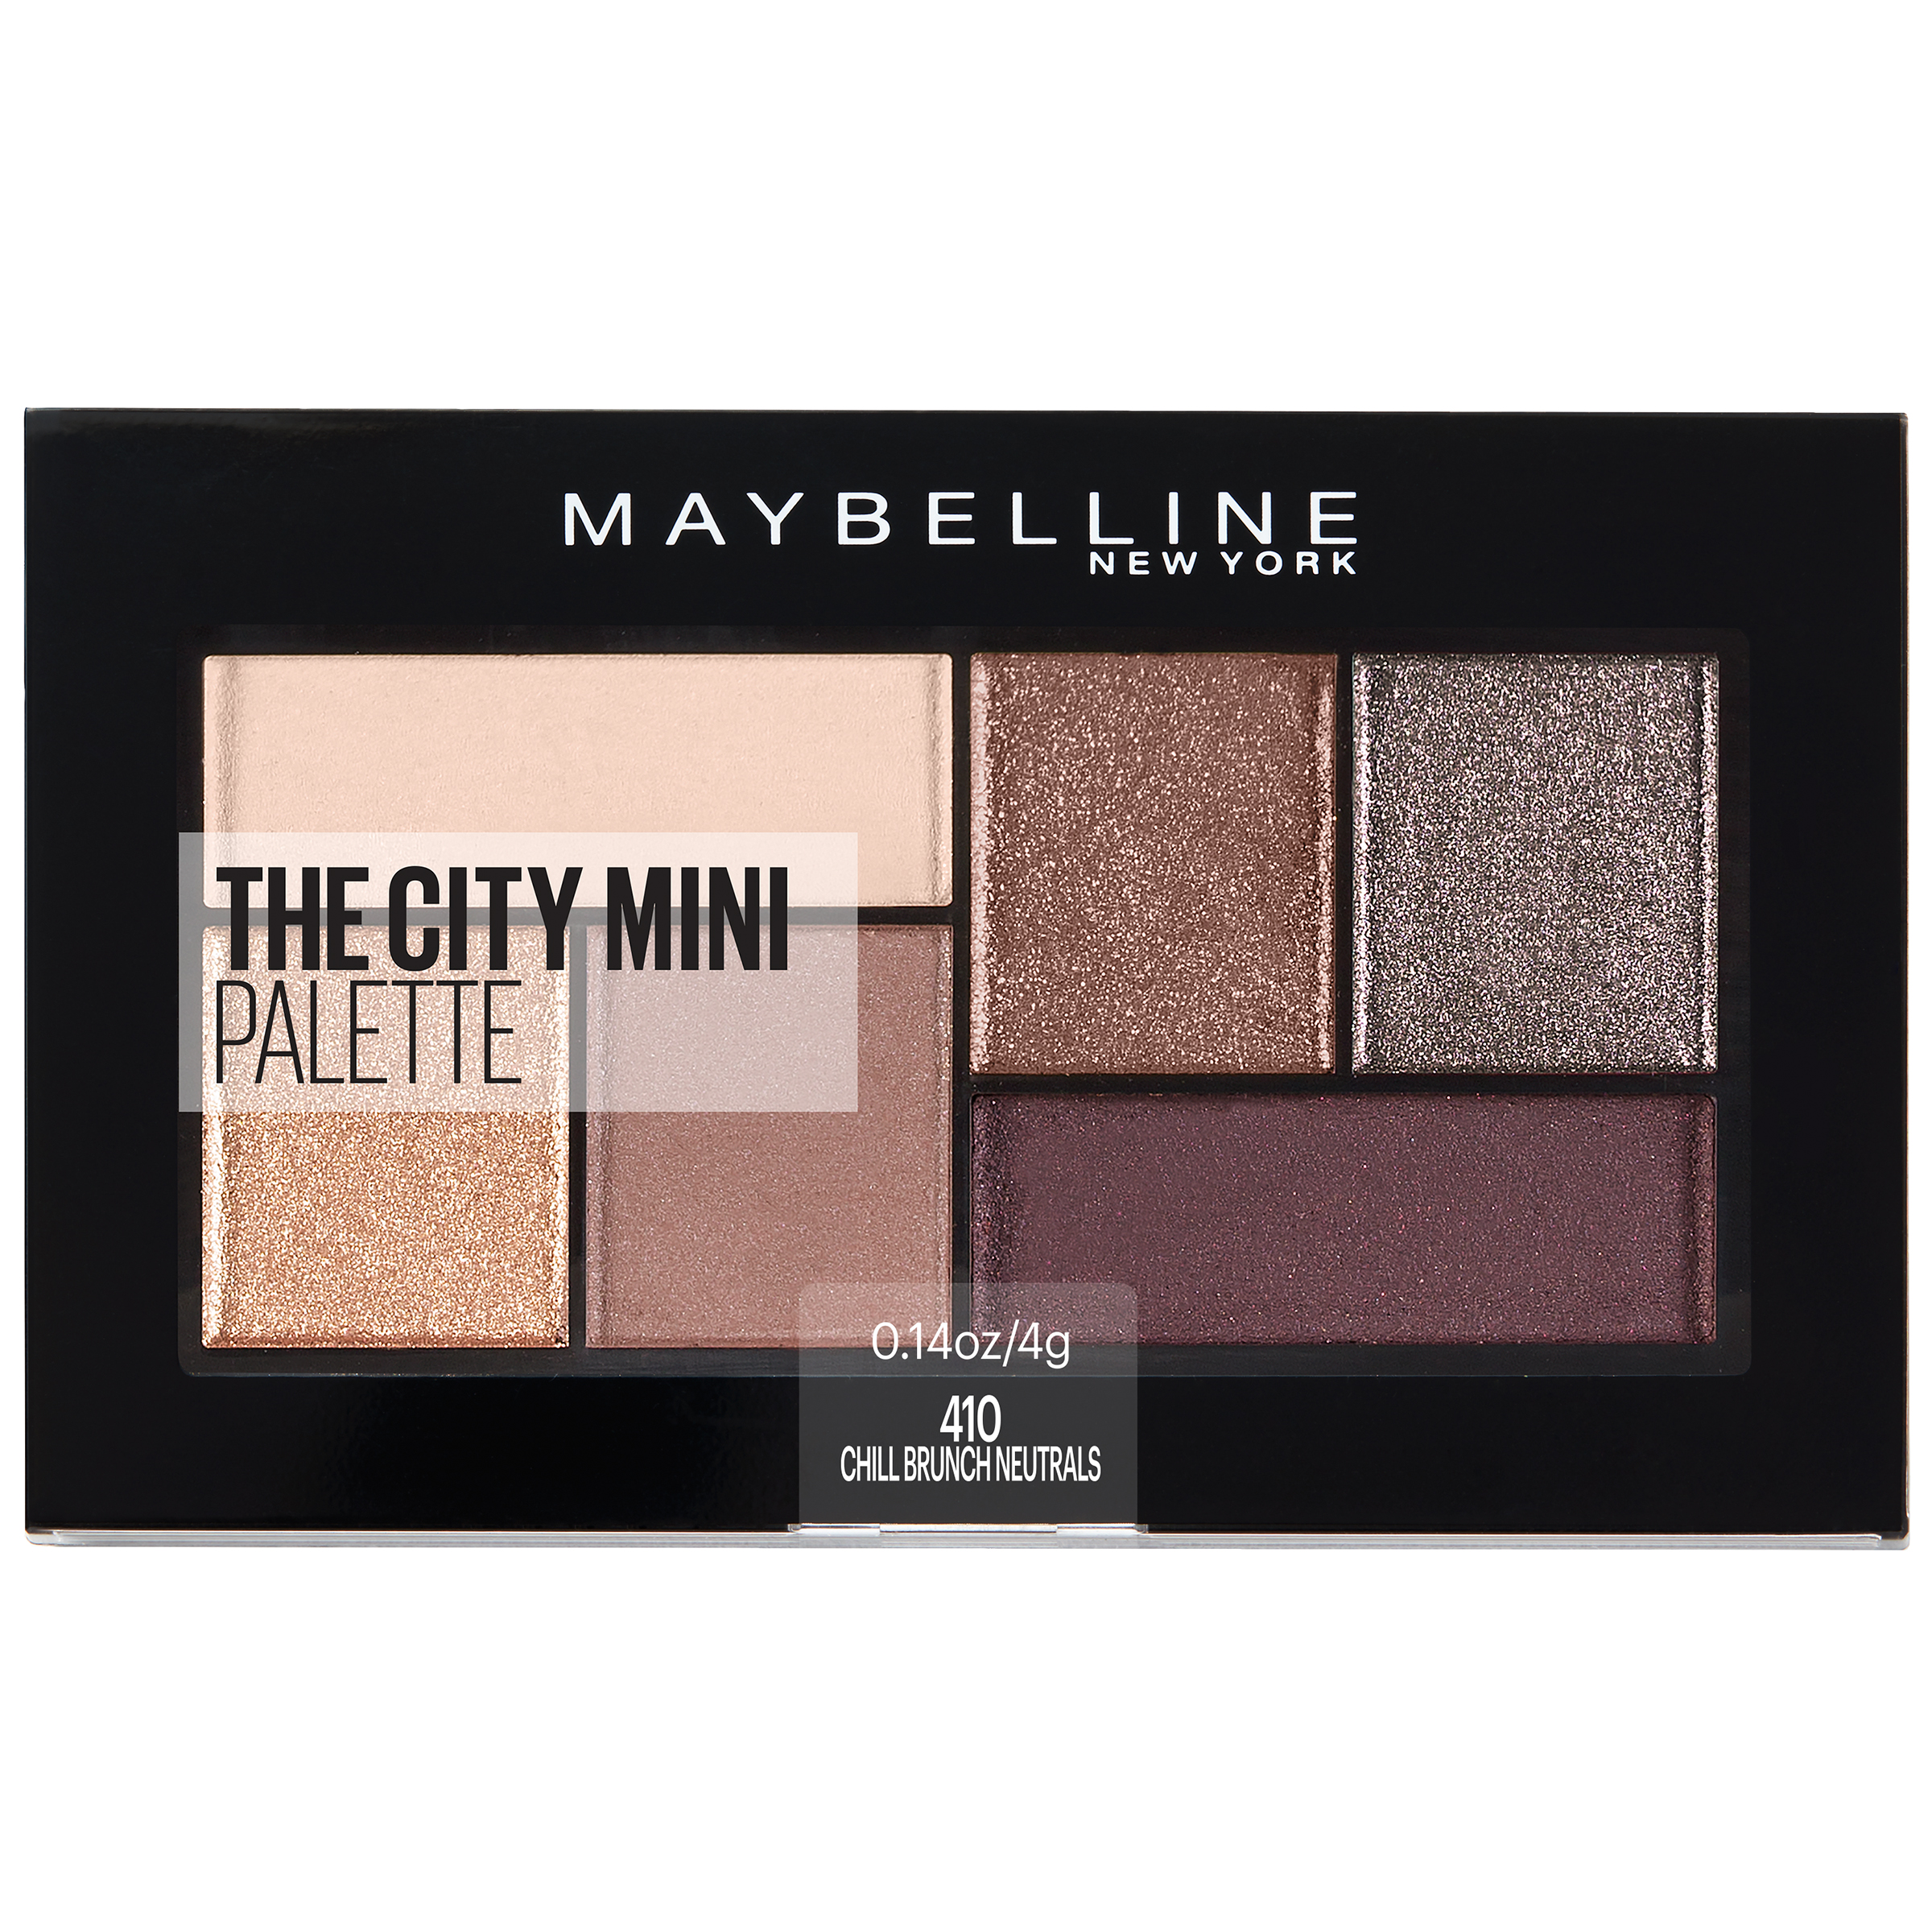 Maybelline New York Maybelline The City Mini Eyeshadow Palette Makeup, Chill Brunch Neutrals, 0.14 oz.